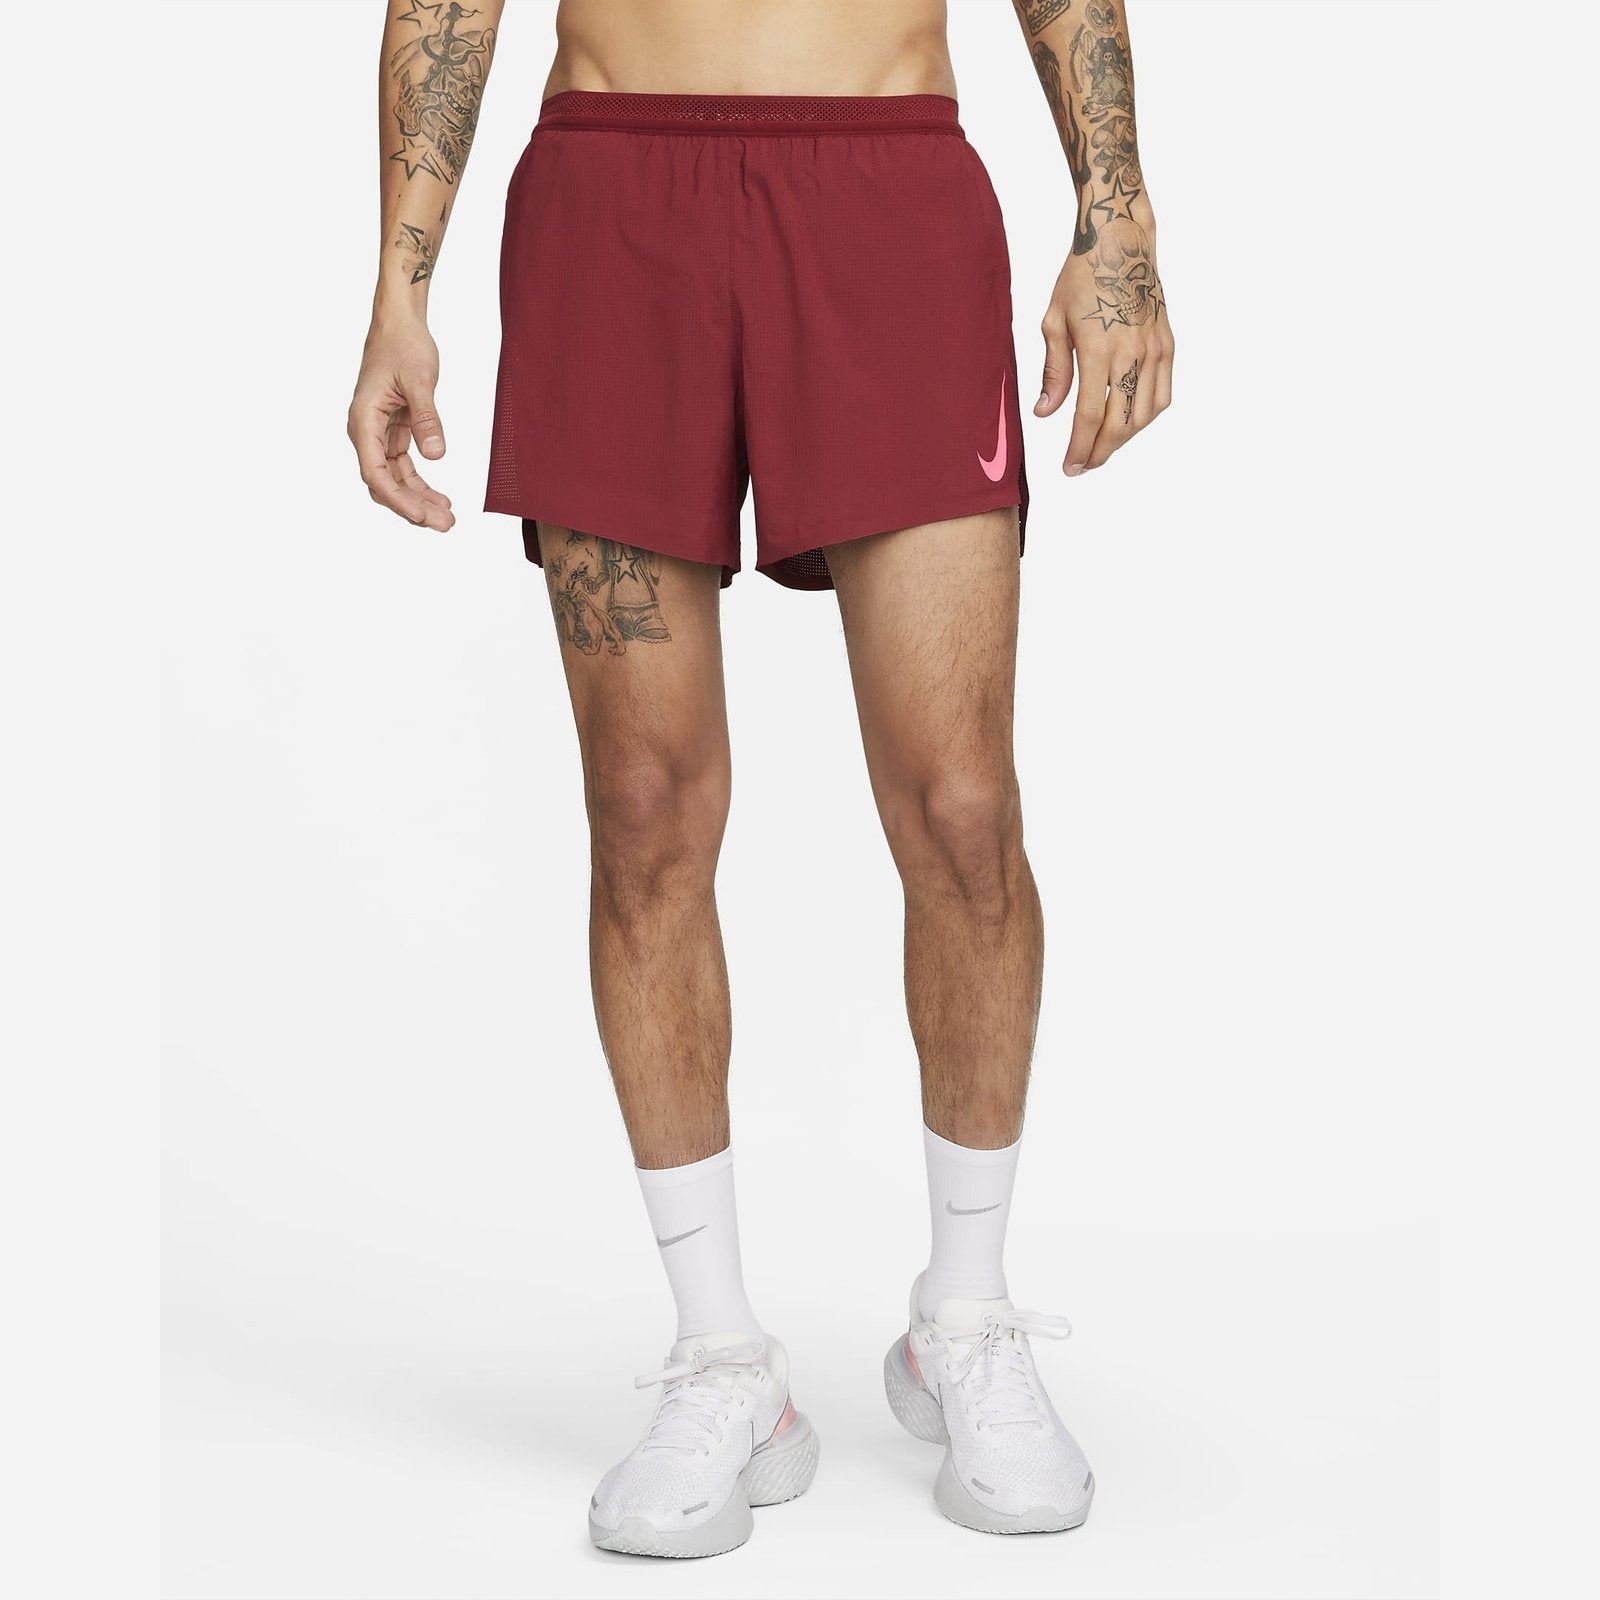 Nike Aeroswift 4 Inch Shorts Mens APPAREL - Mens Shorts TEAM RED/HYPER PINK